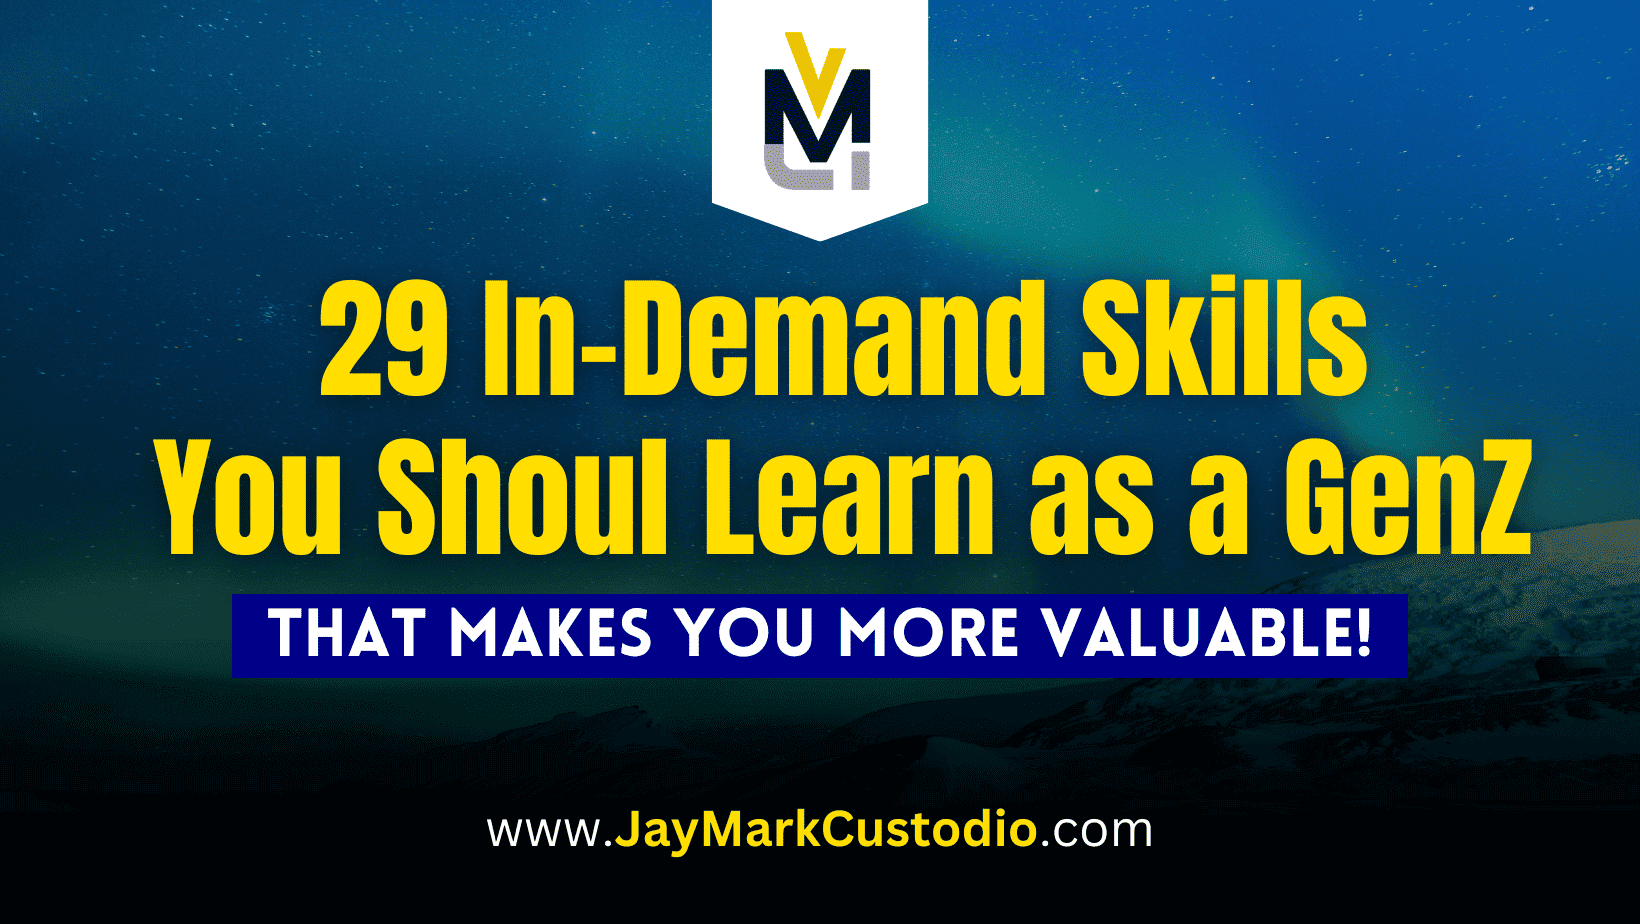 In-Demand Skills